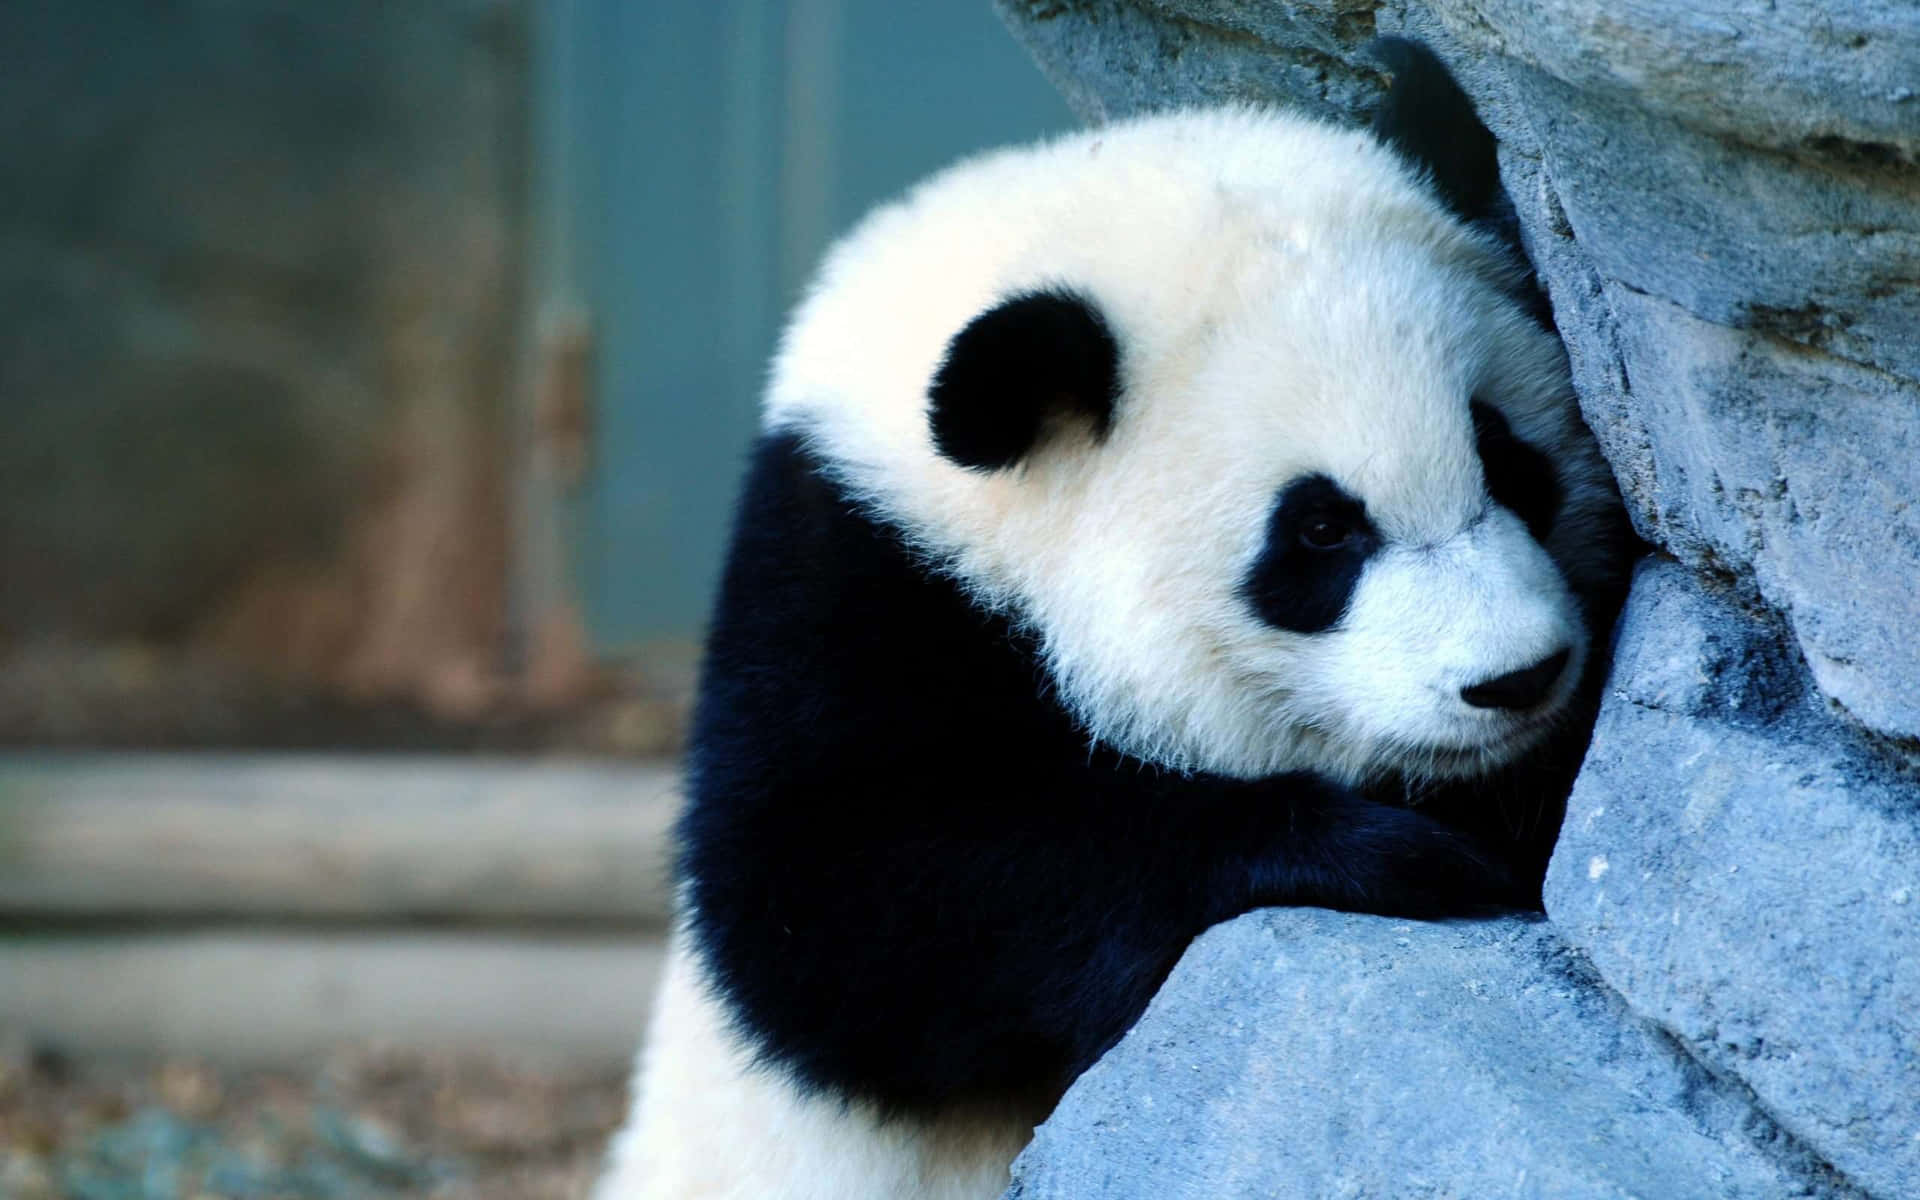 A young panda enjoying a snack in its natural habitat.